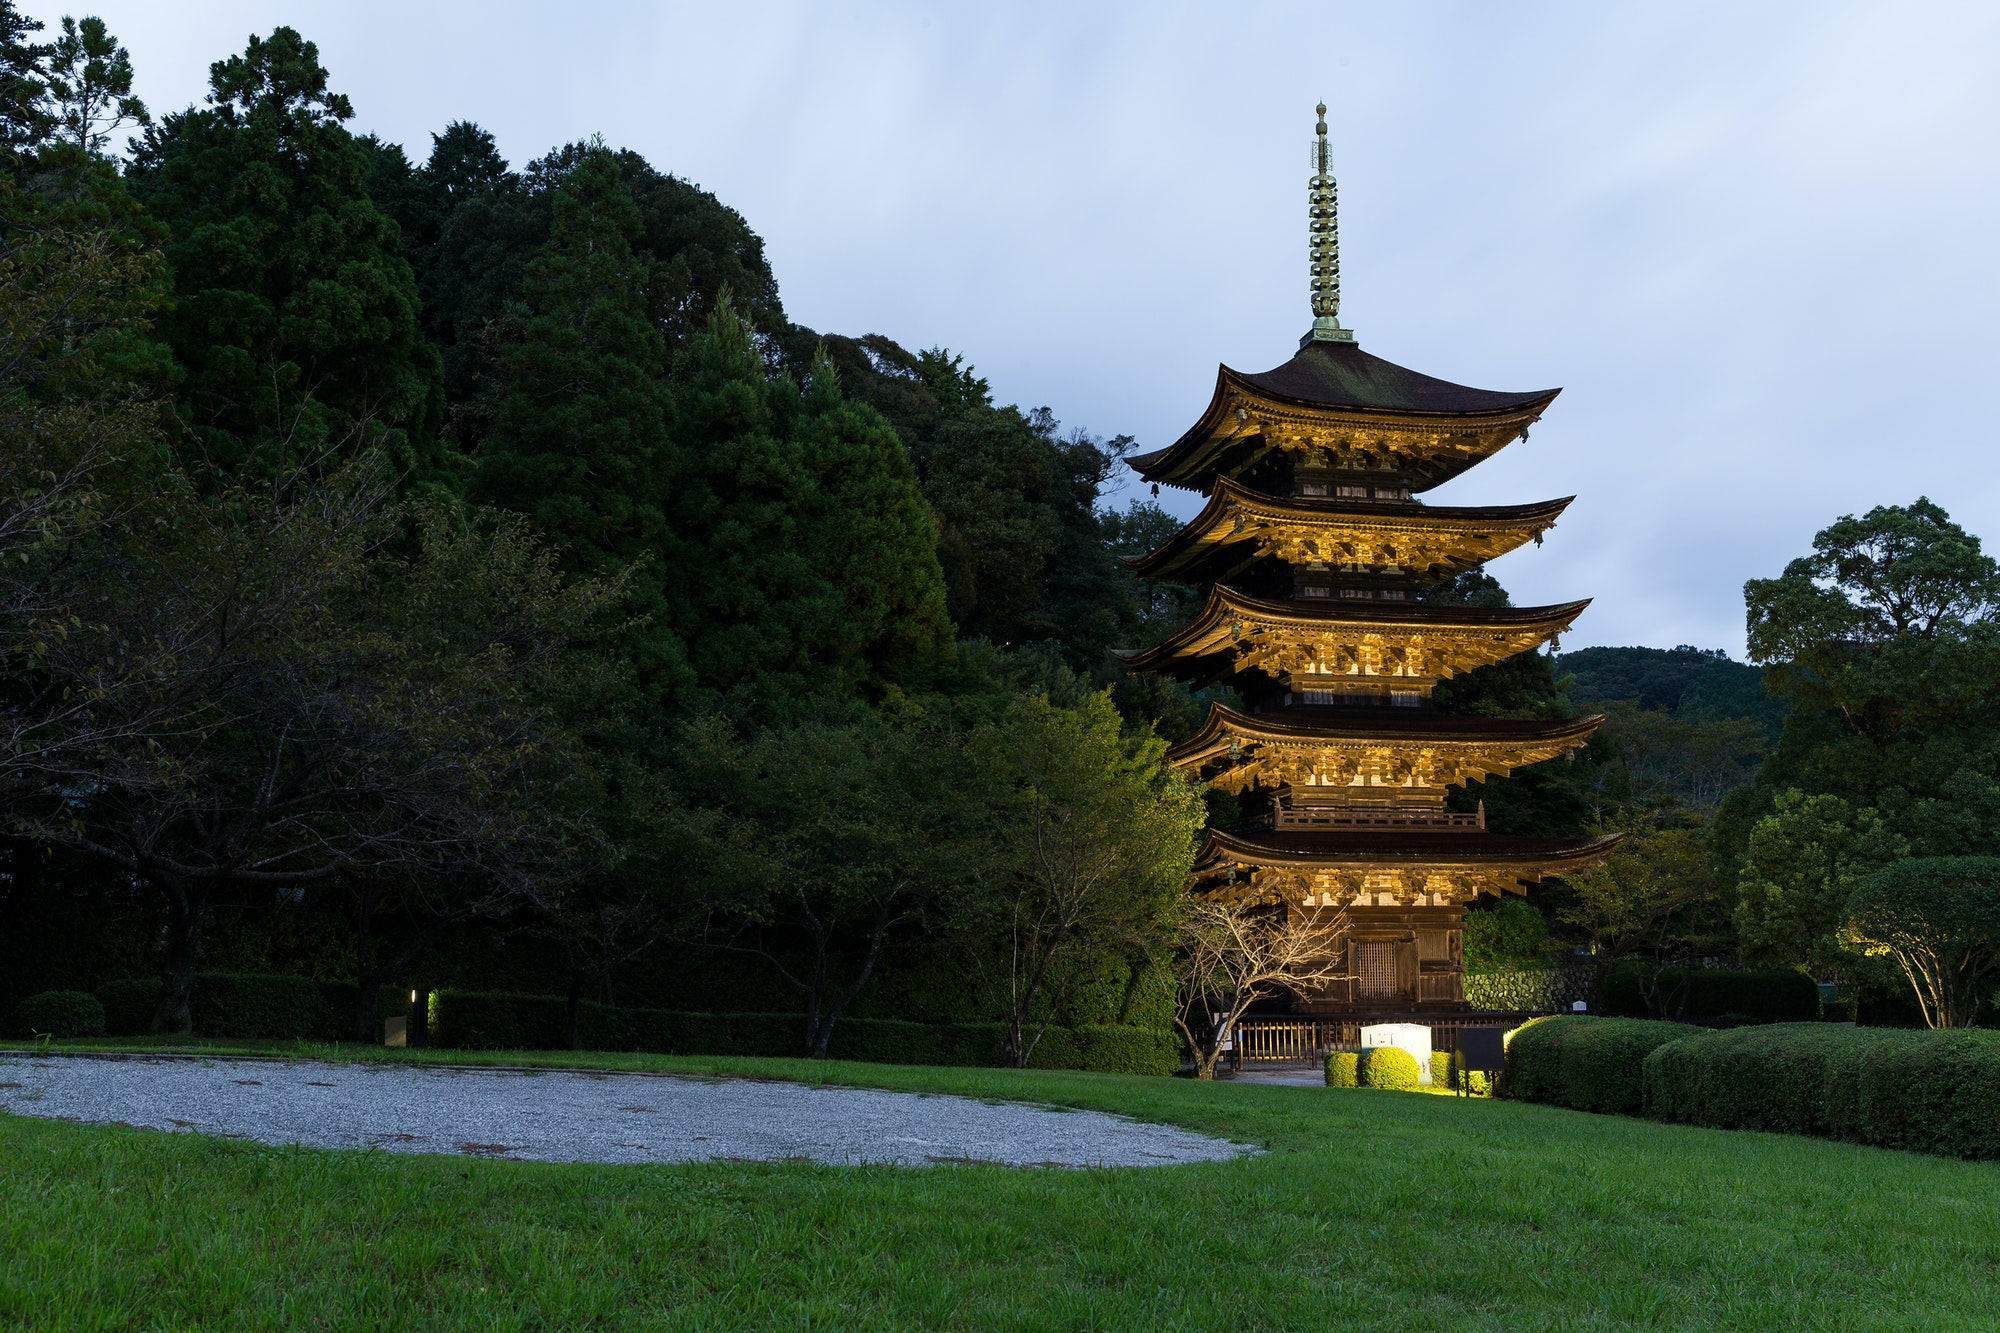 Rurikoji temple in Japan